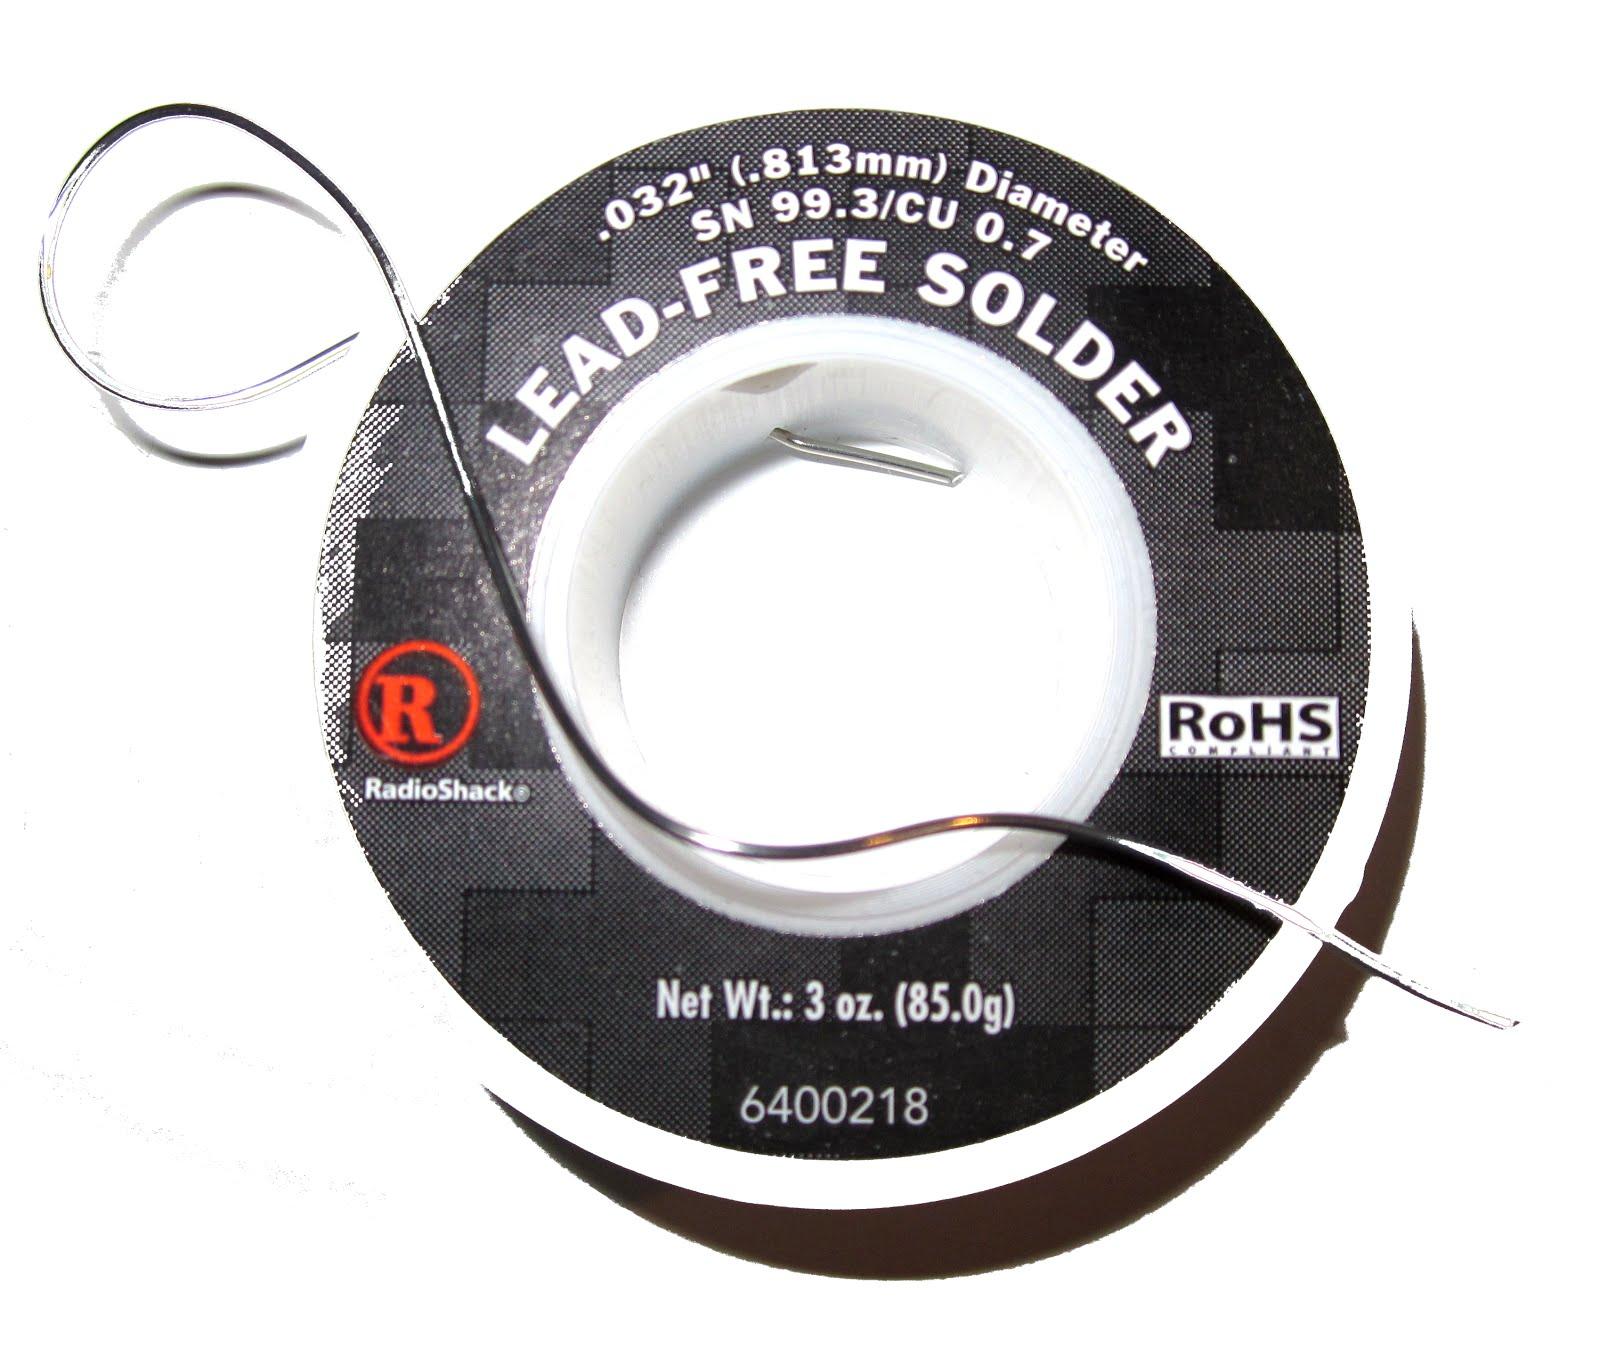 Lead free solder